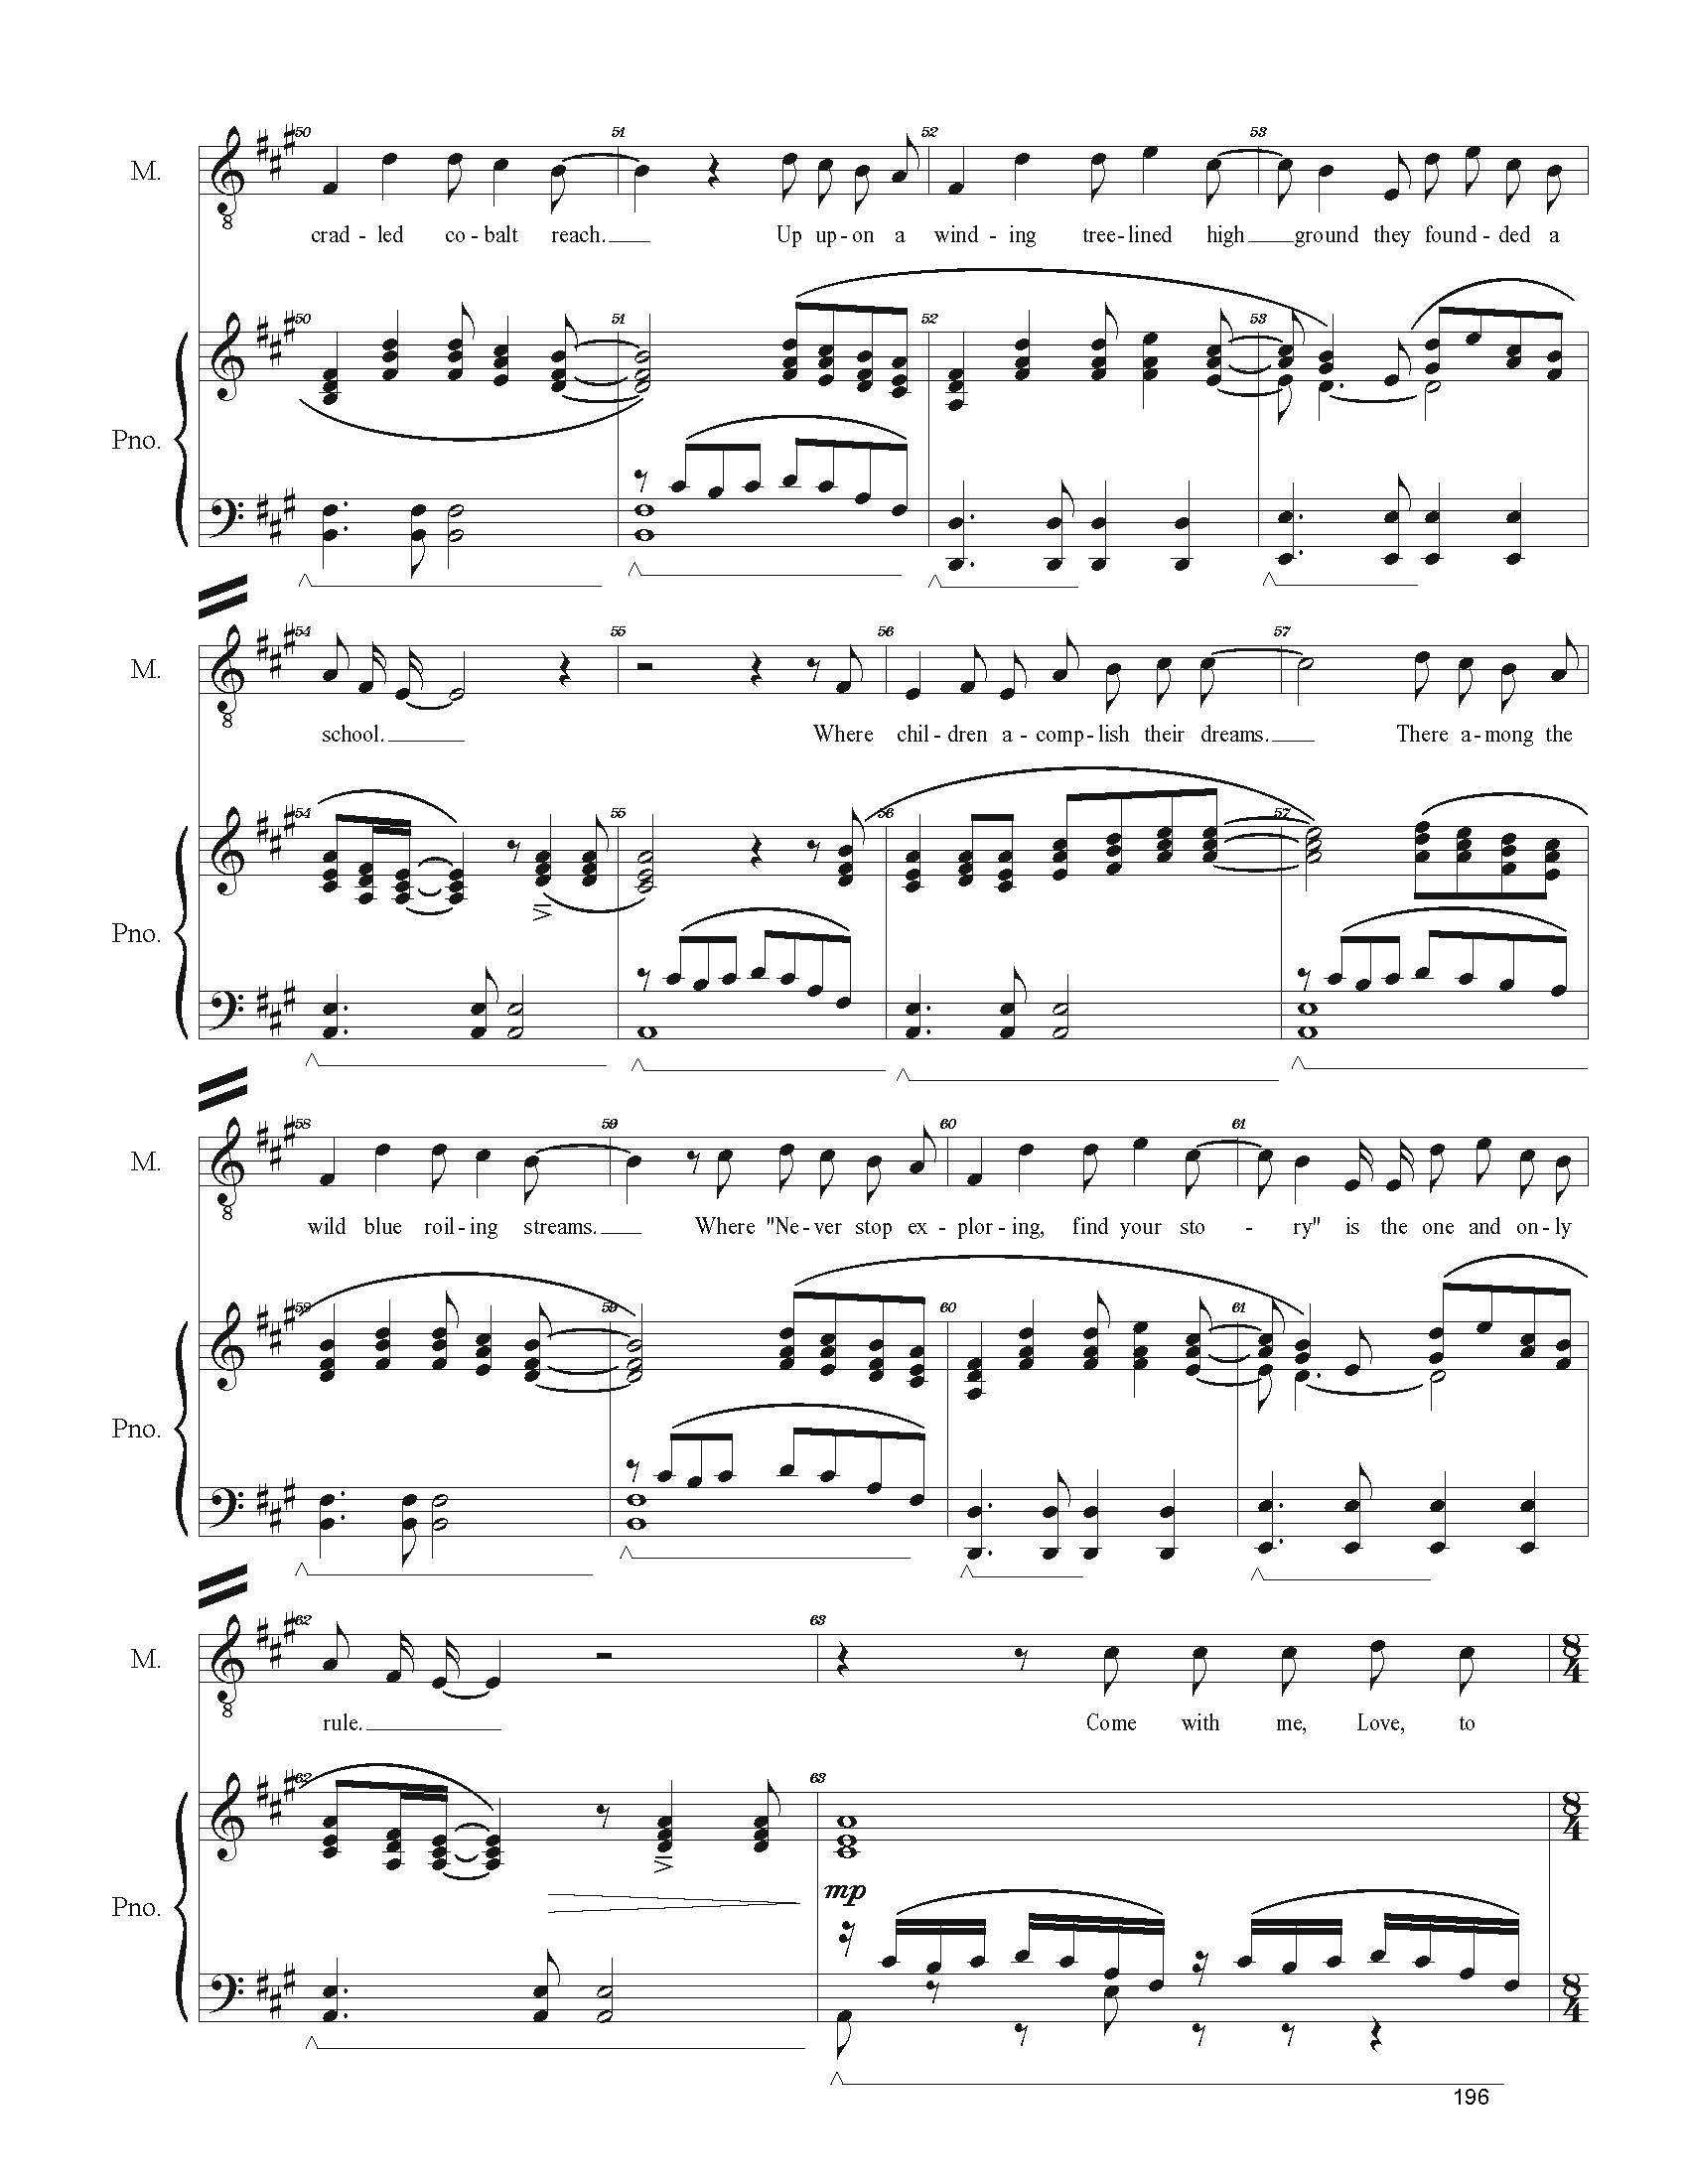 FULL PIANO VOCAL SCORE DRAFT 1 - Score_Page_196.jpg